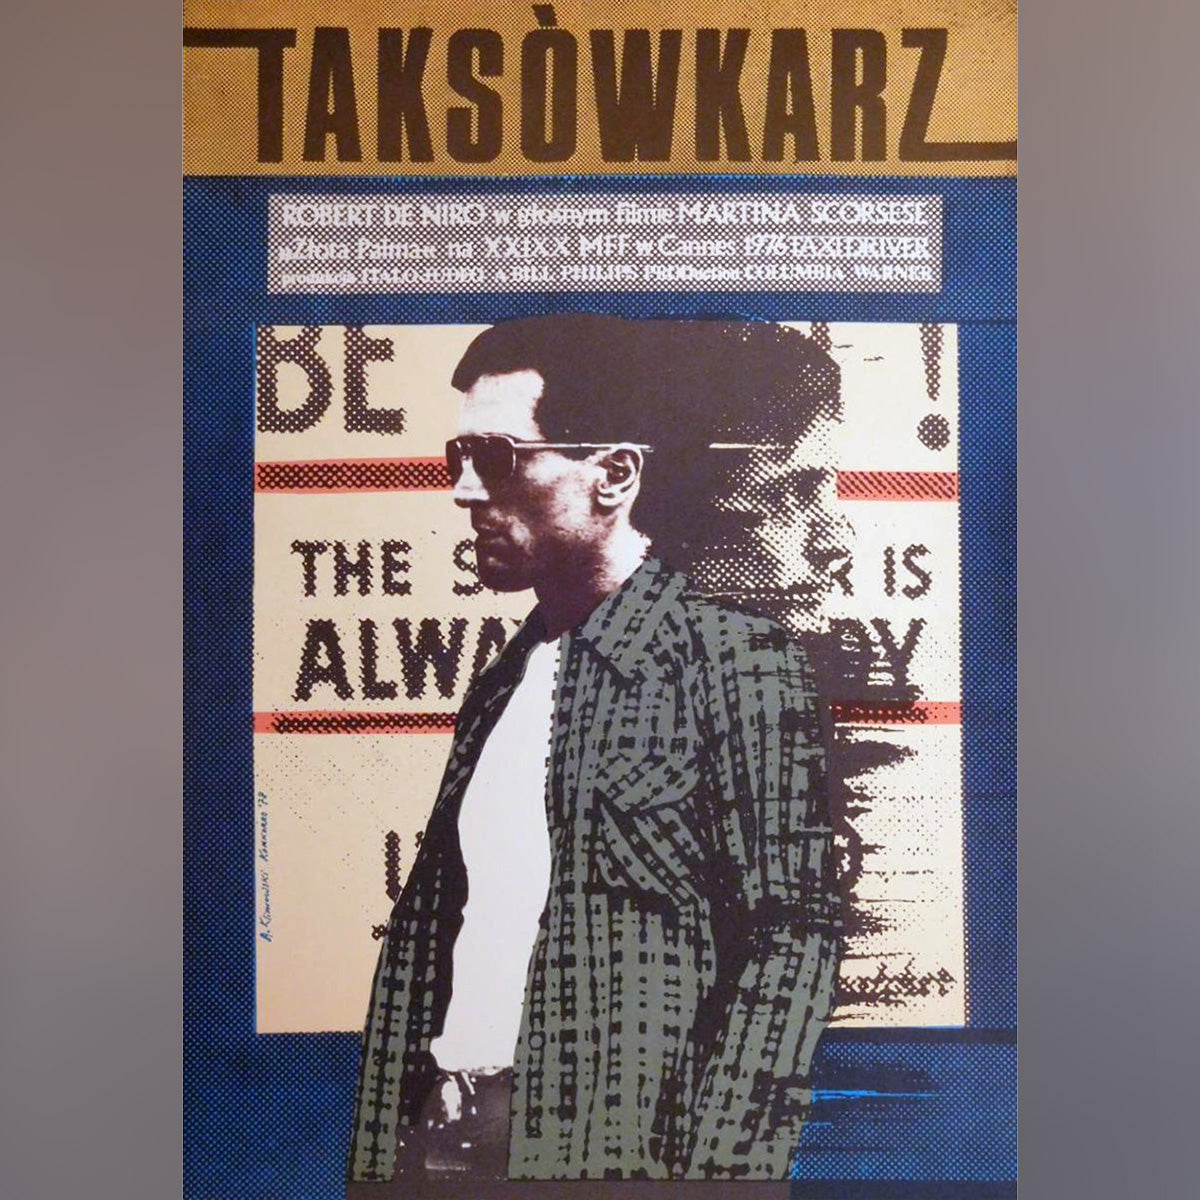 Original Movie Poster of Taxi Driver (1976)